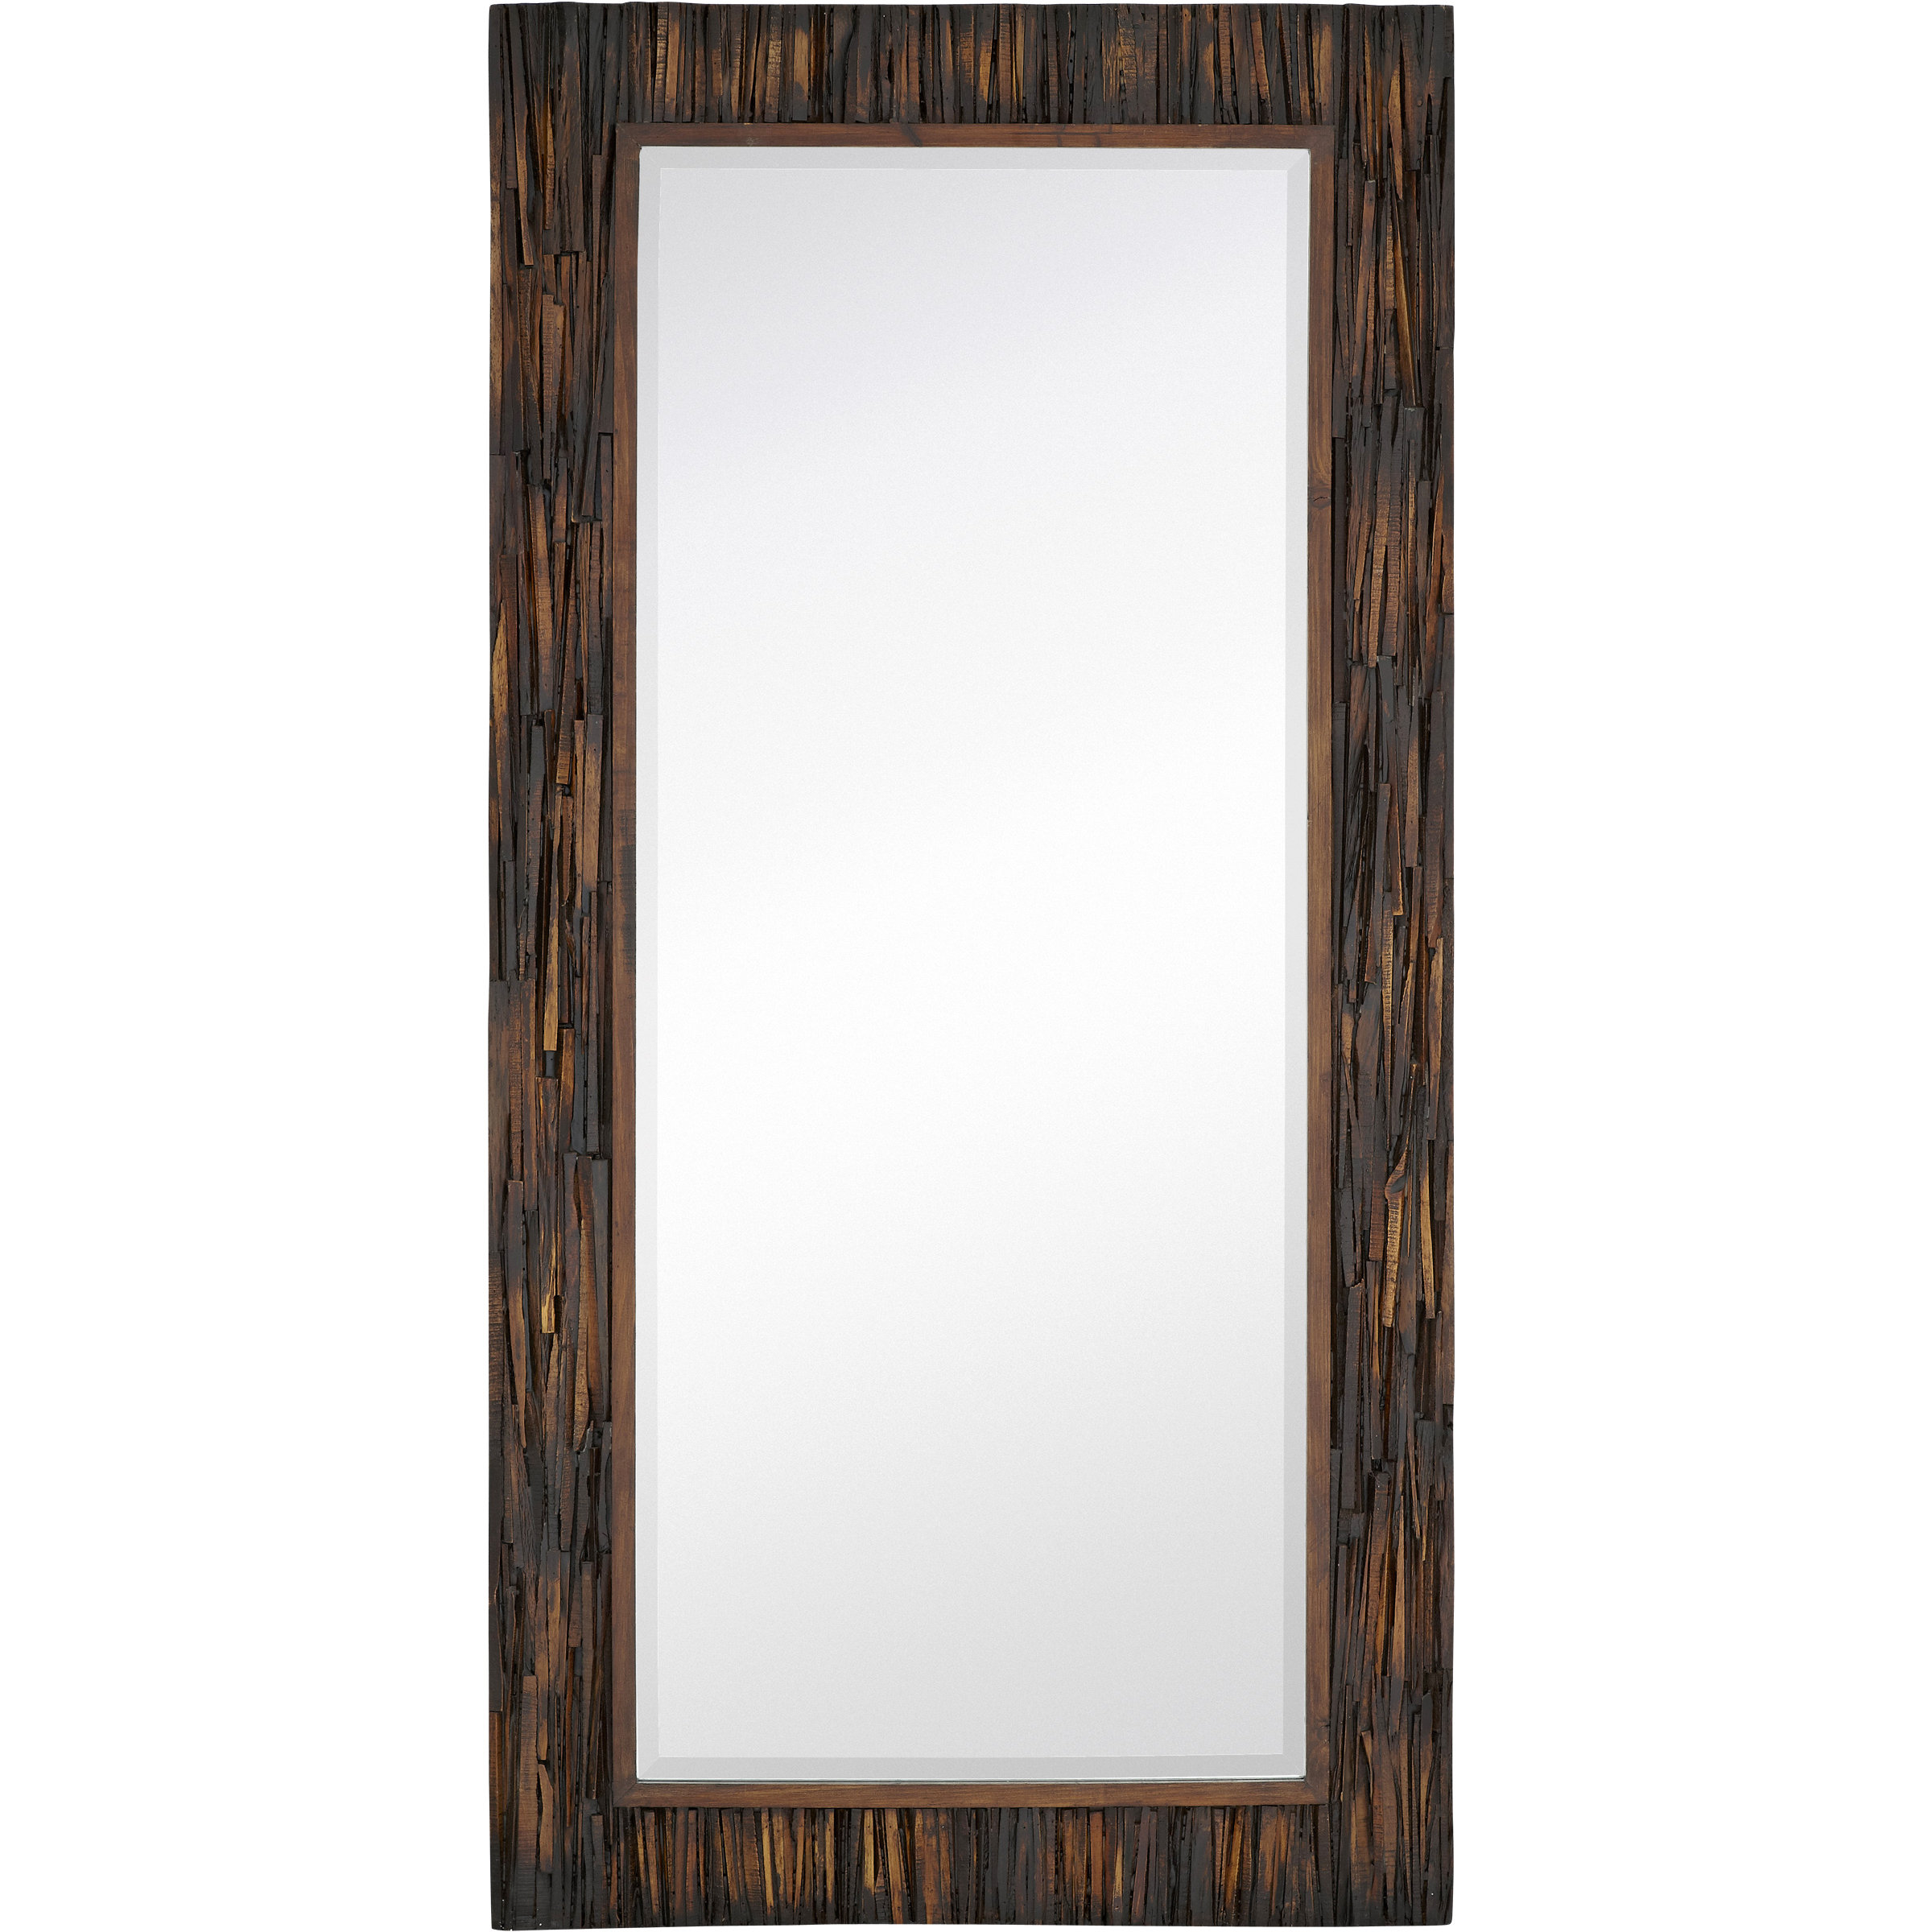 Large-scale Rectangular Natural Wood Framed Mirror | Wayfair